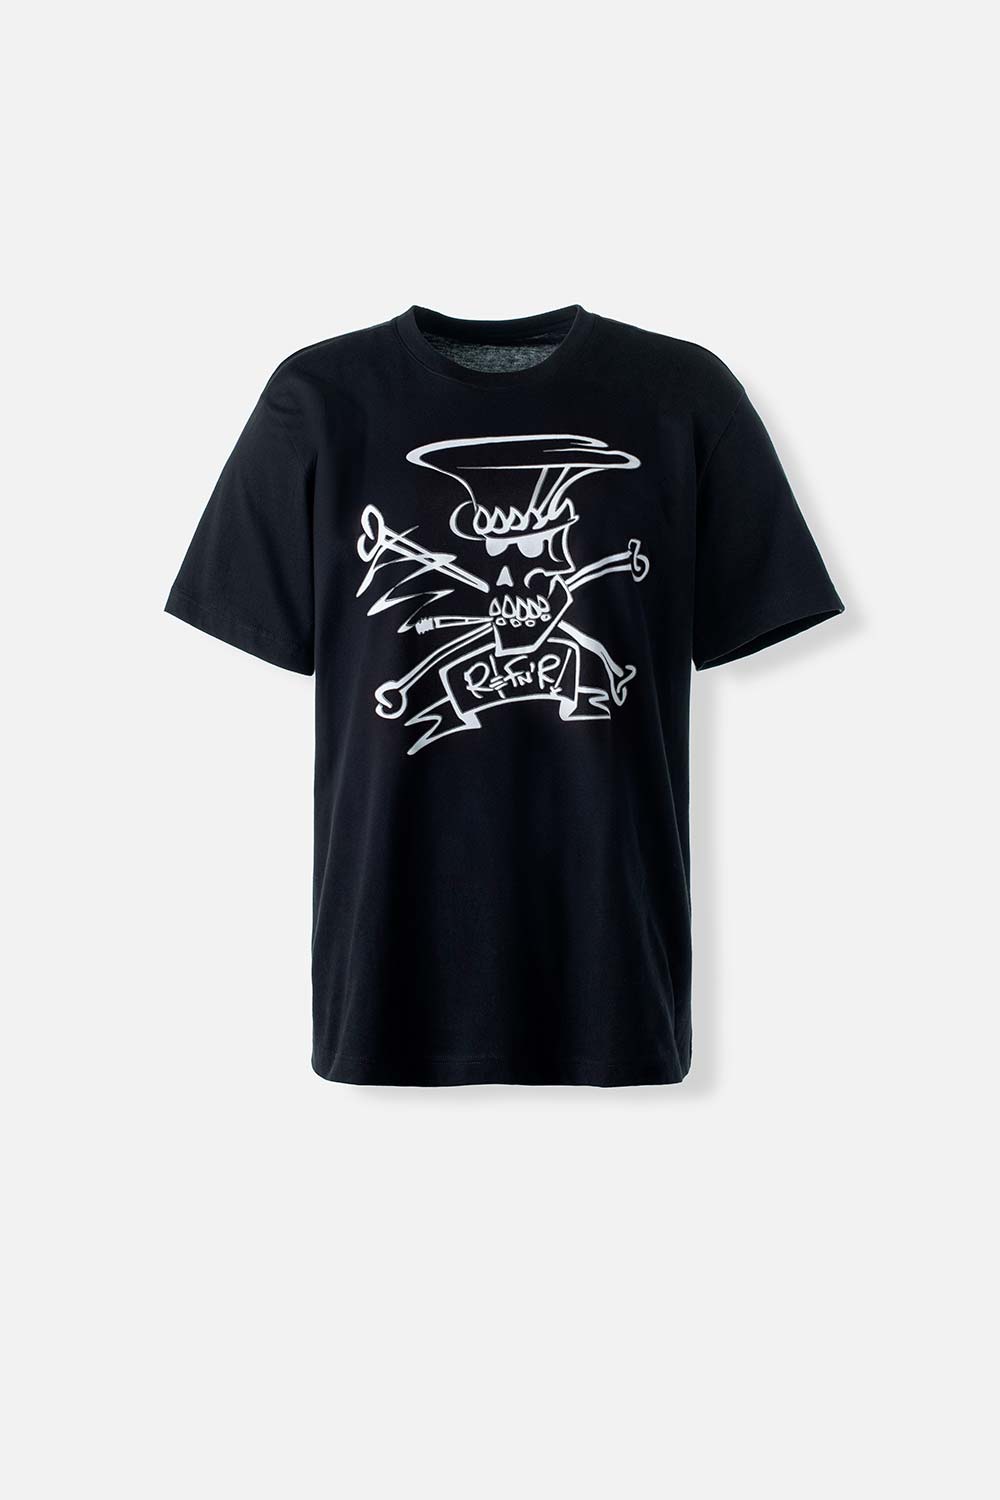 Camiseta de Slash negra manga corta unisex XS-0